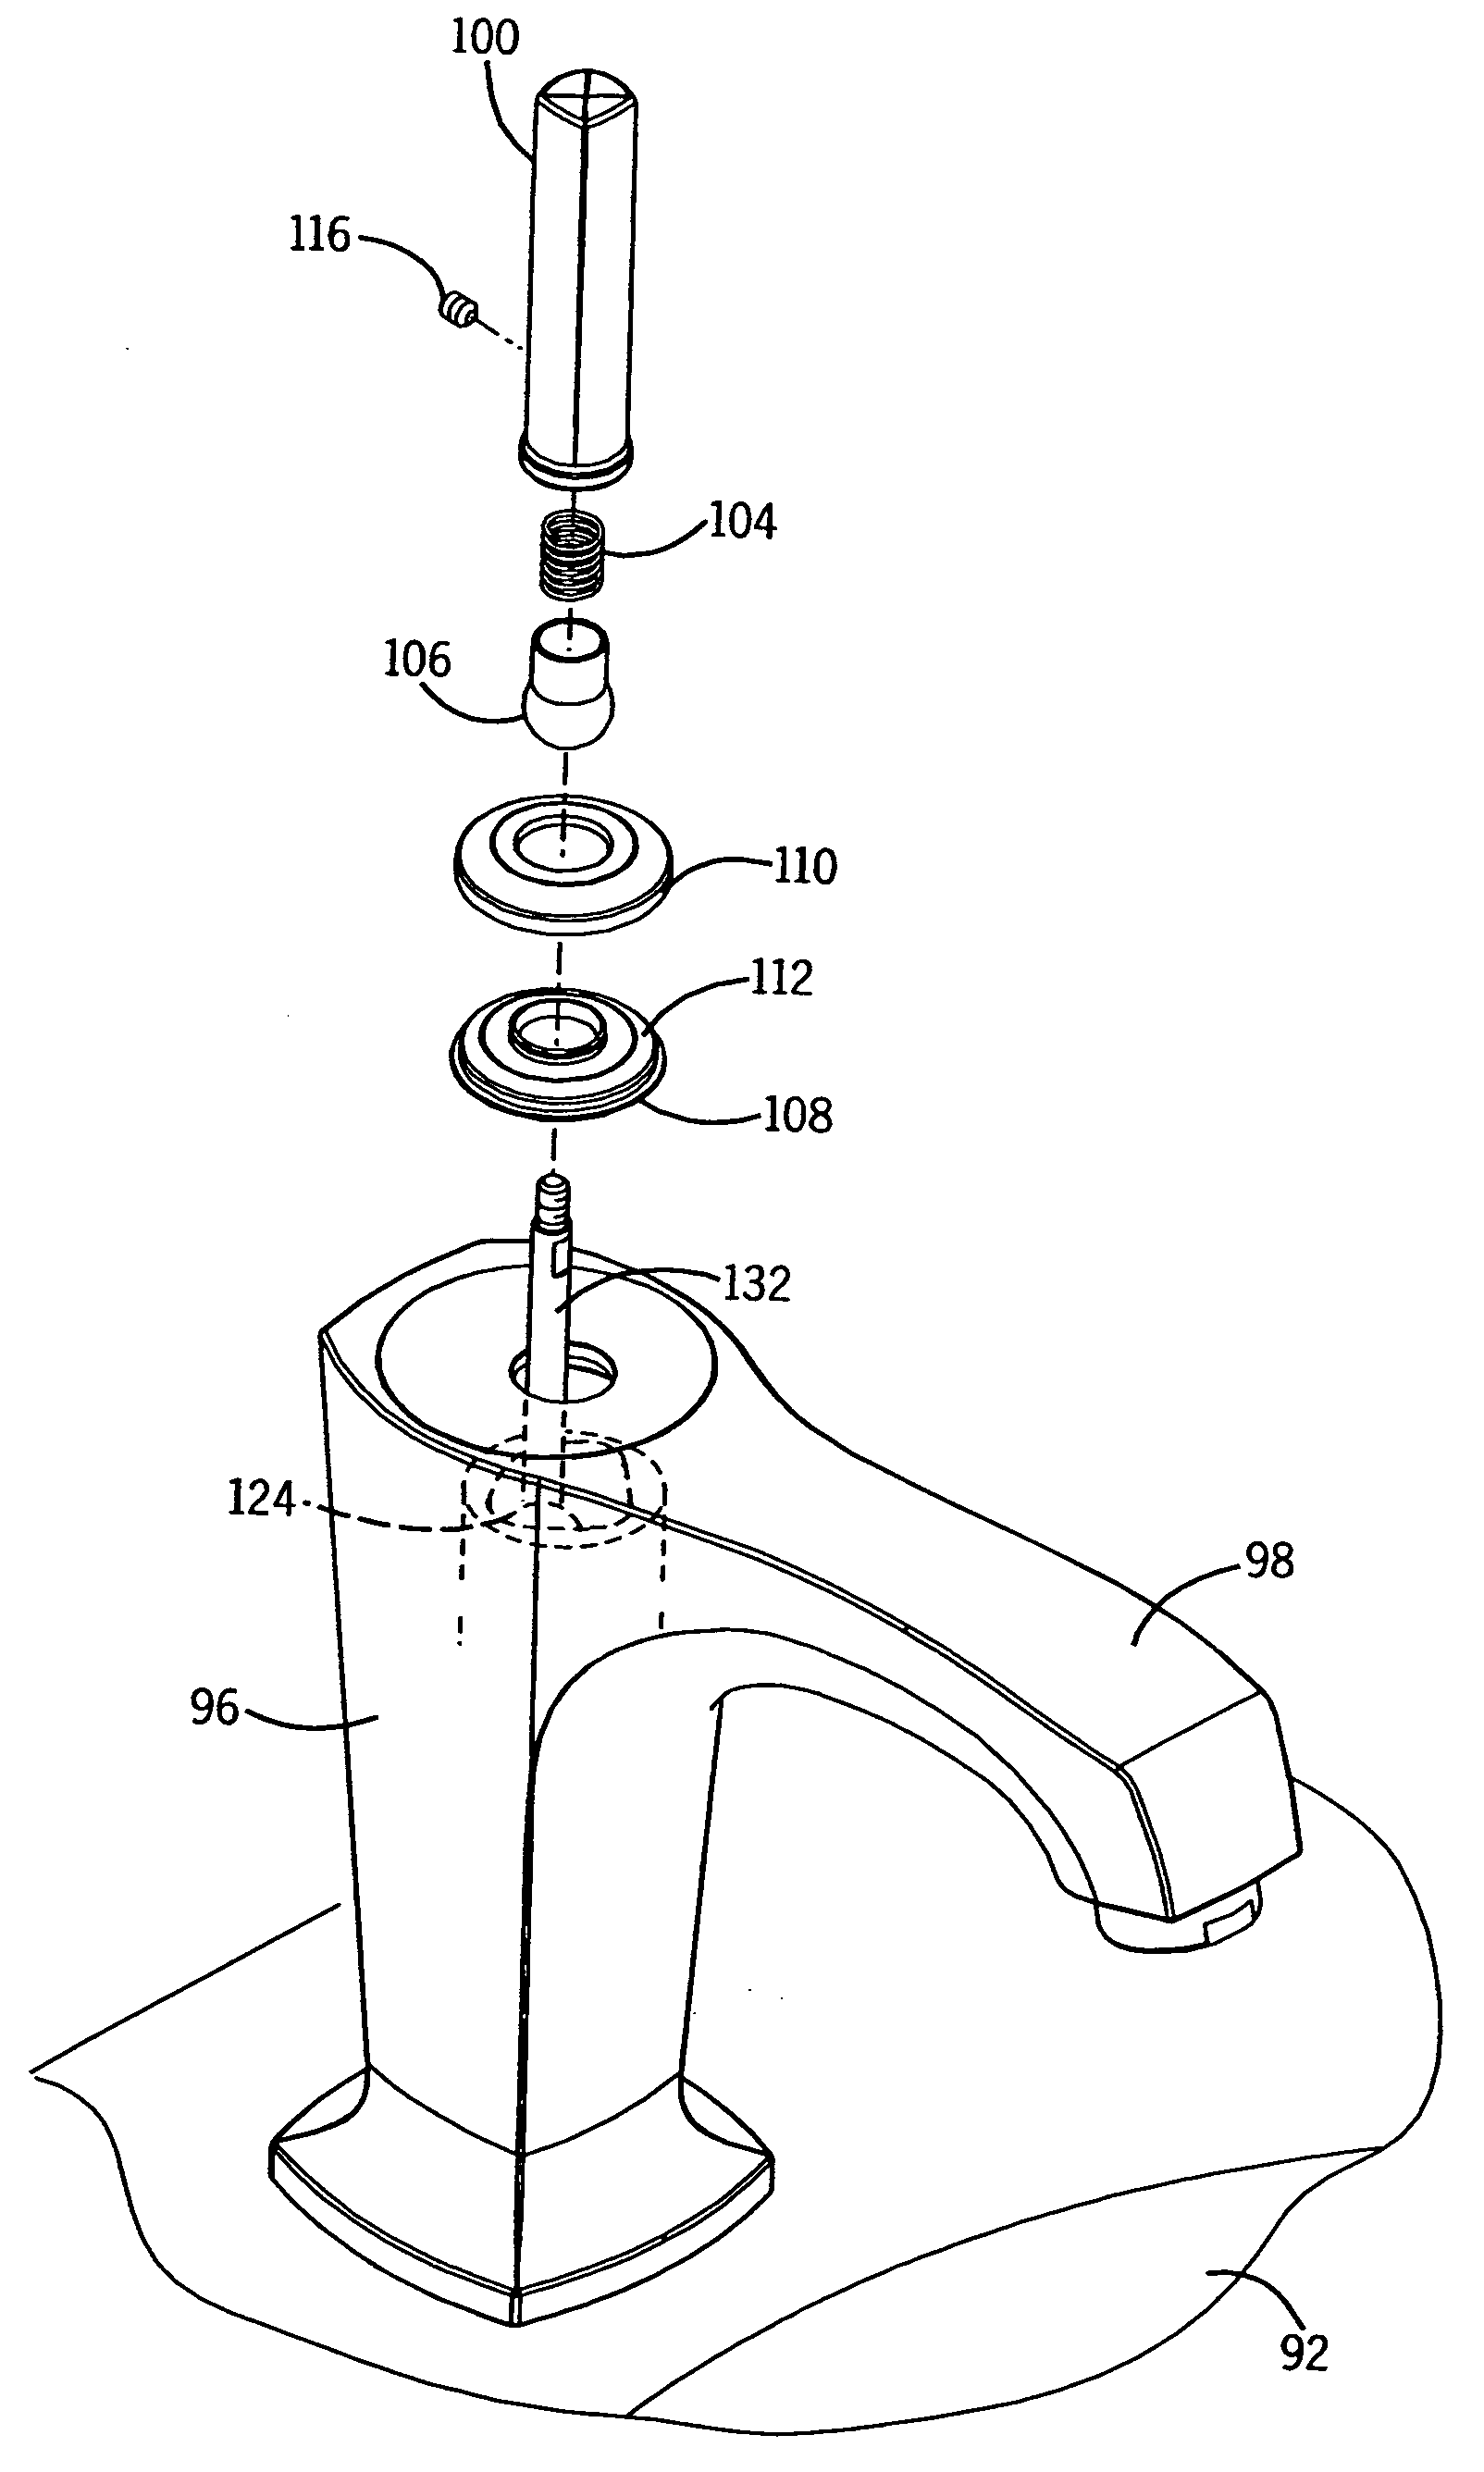 Plumbing valve with stick control handle